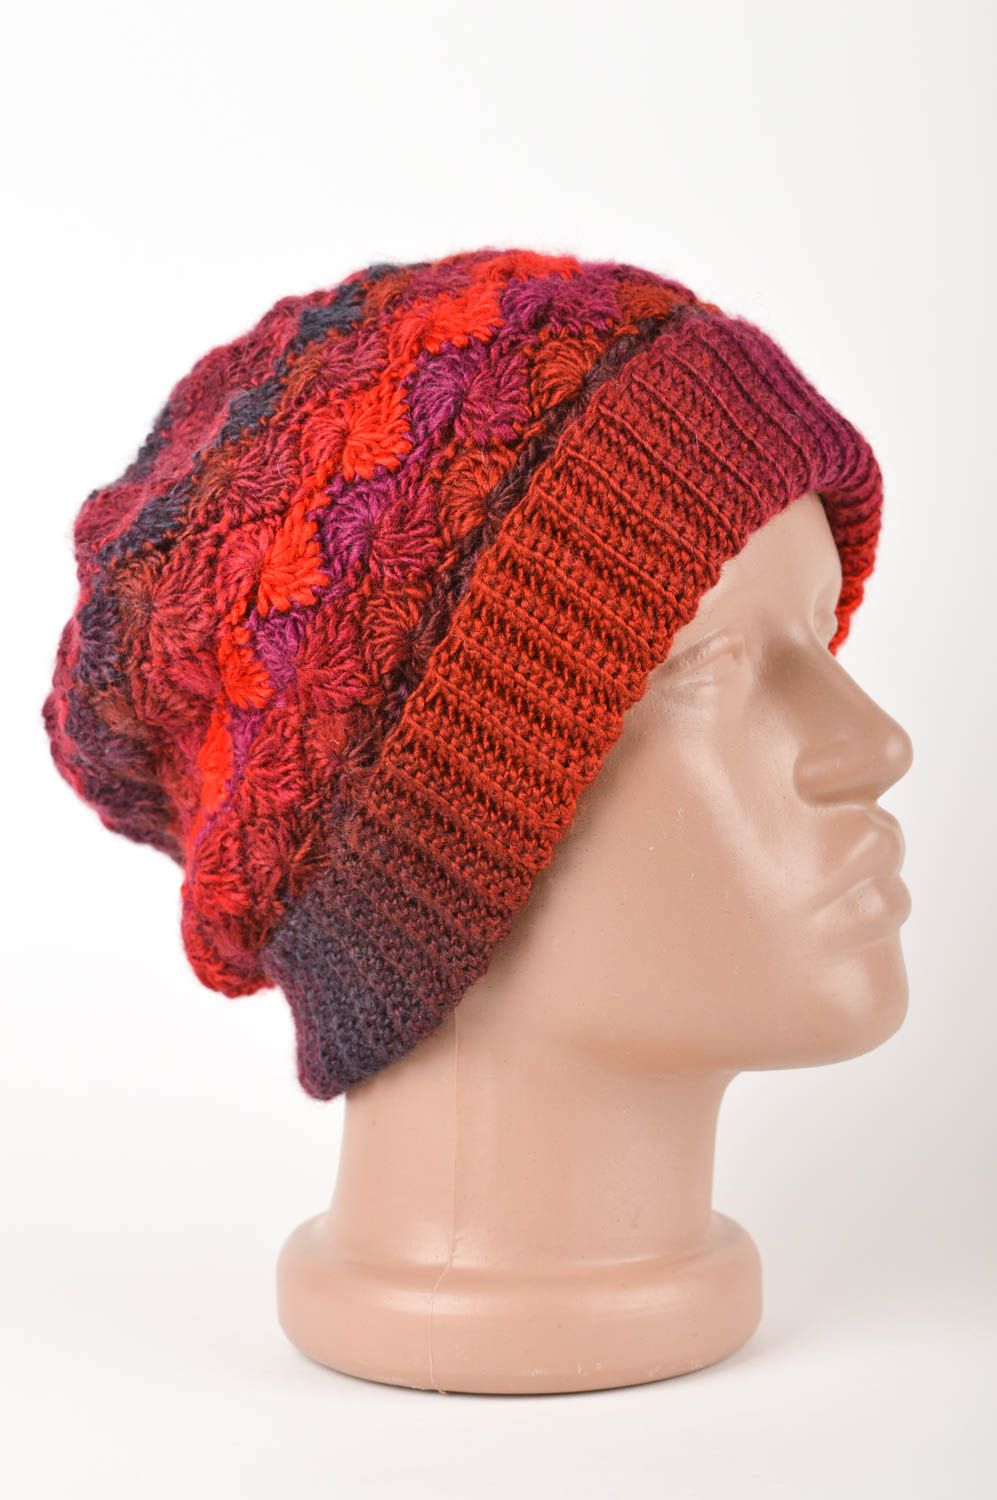 Handmade winter cap stylish warm headwear unusual colorful cap woolen hat photo 3